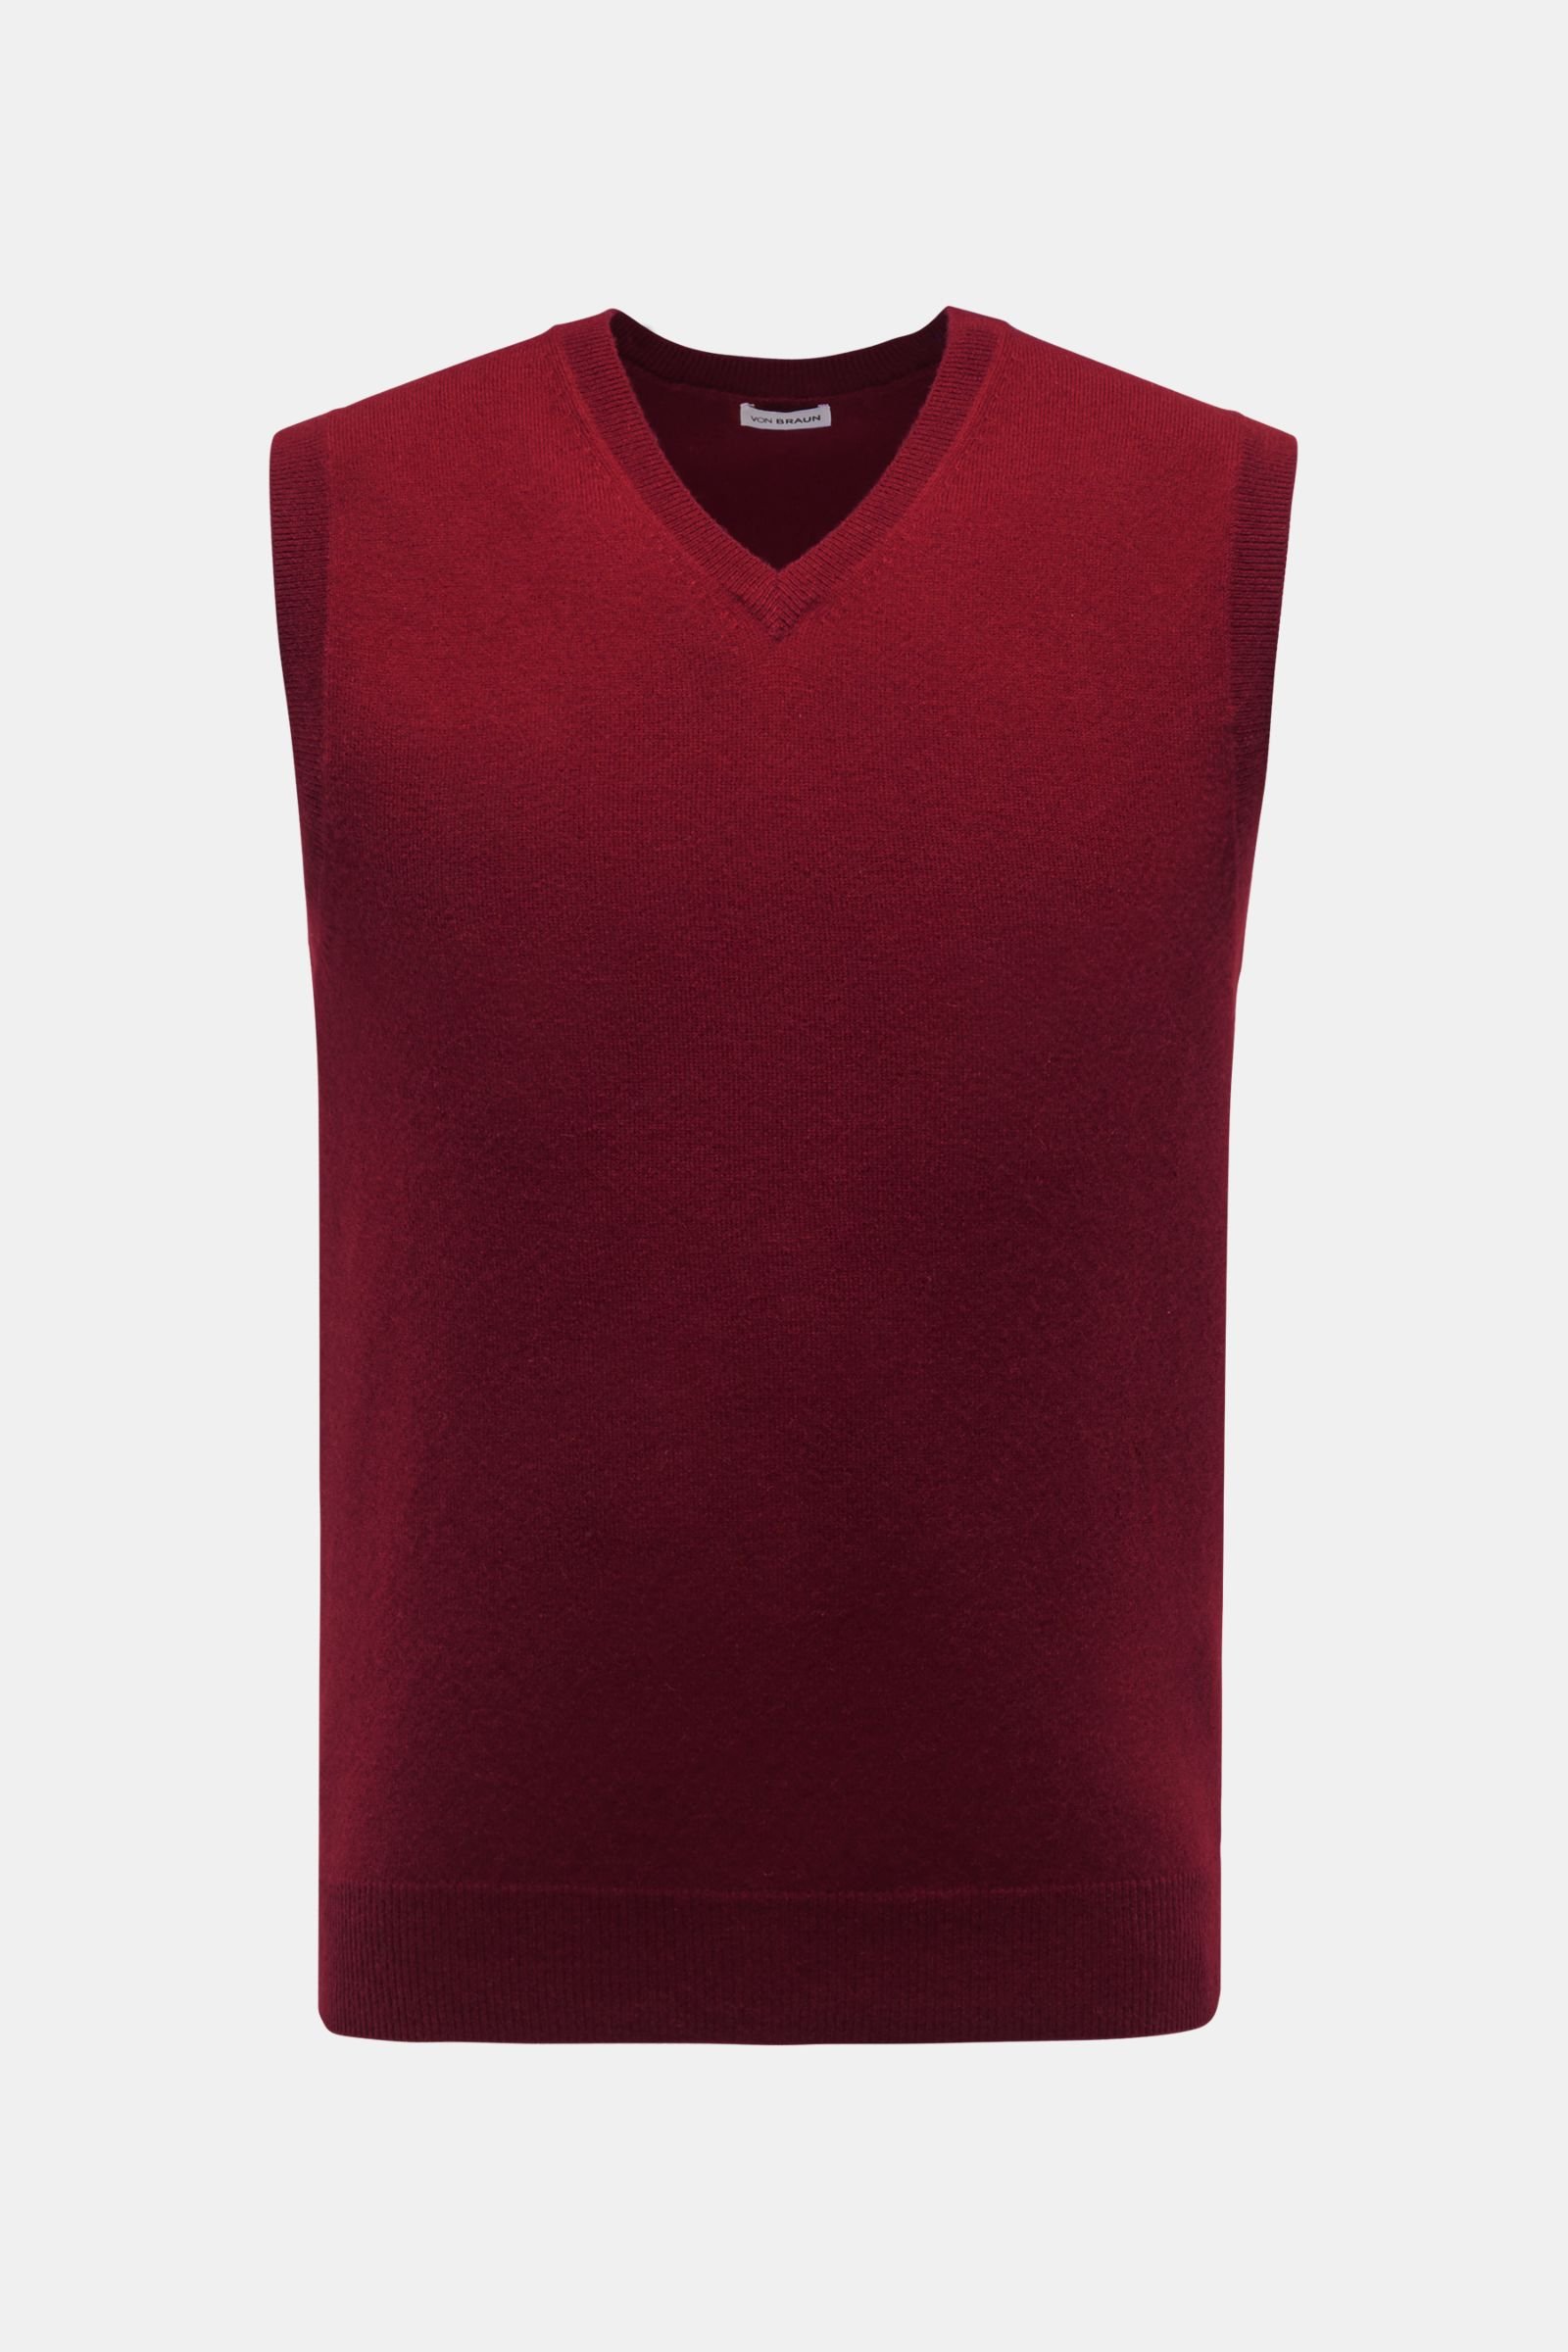 Cashmere V-neck sweater vest dark red